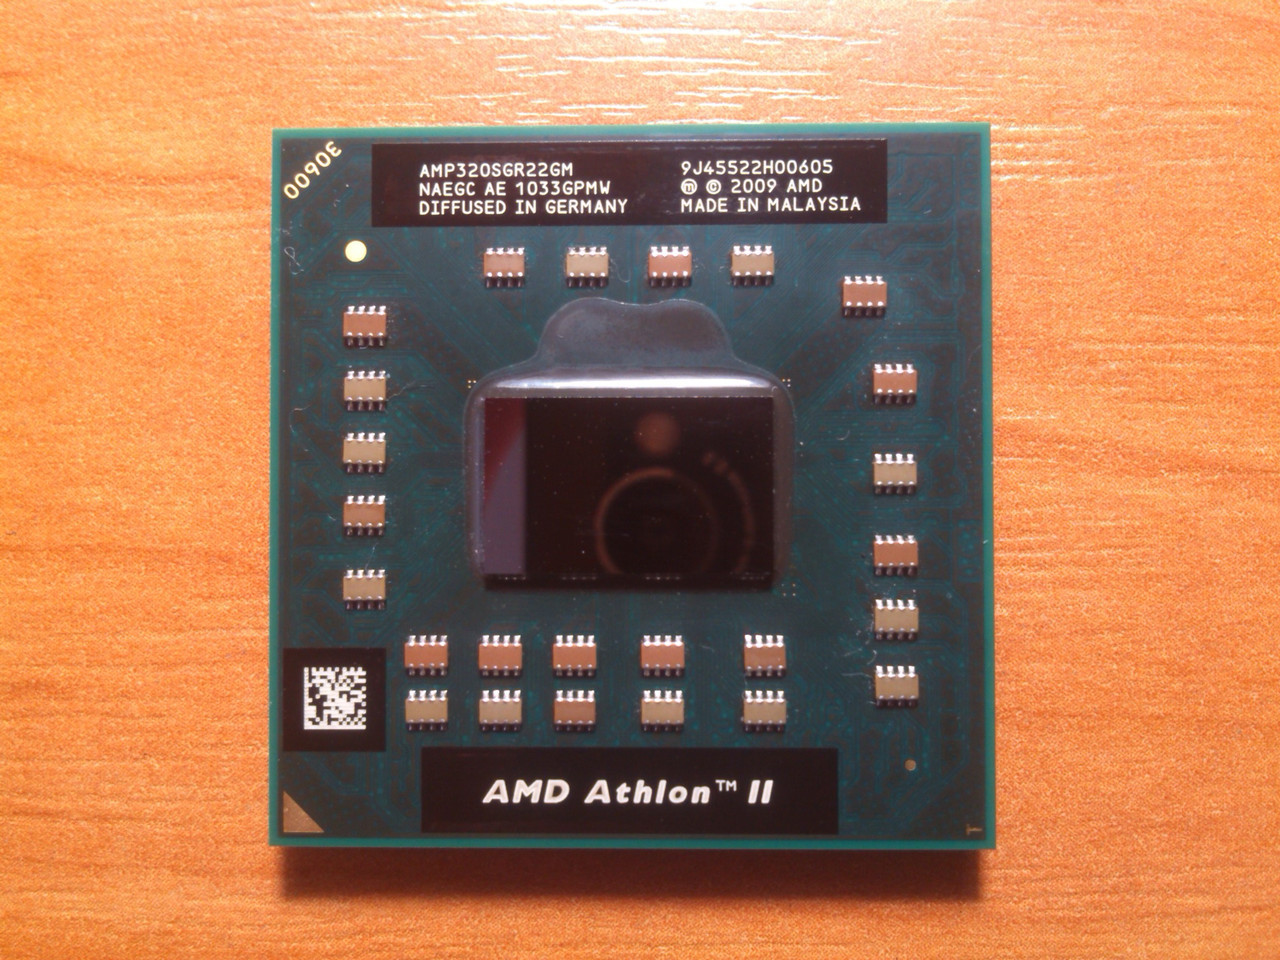 AMD Athlon II P320 AMP320SGR22GM сокет S1 Гарантія!